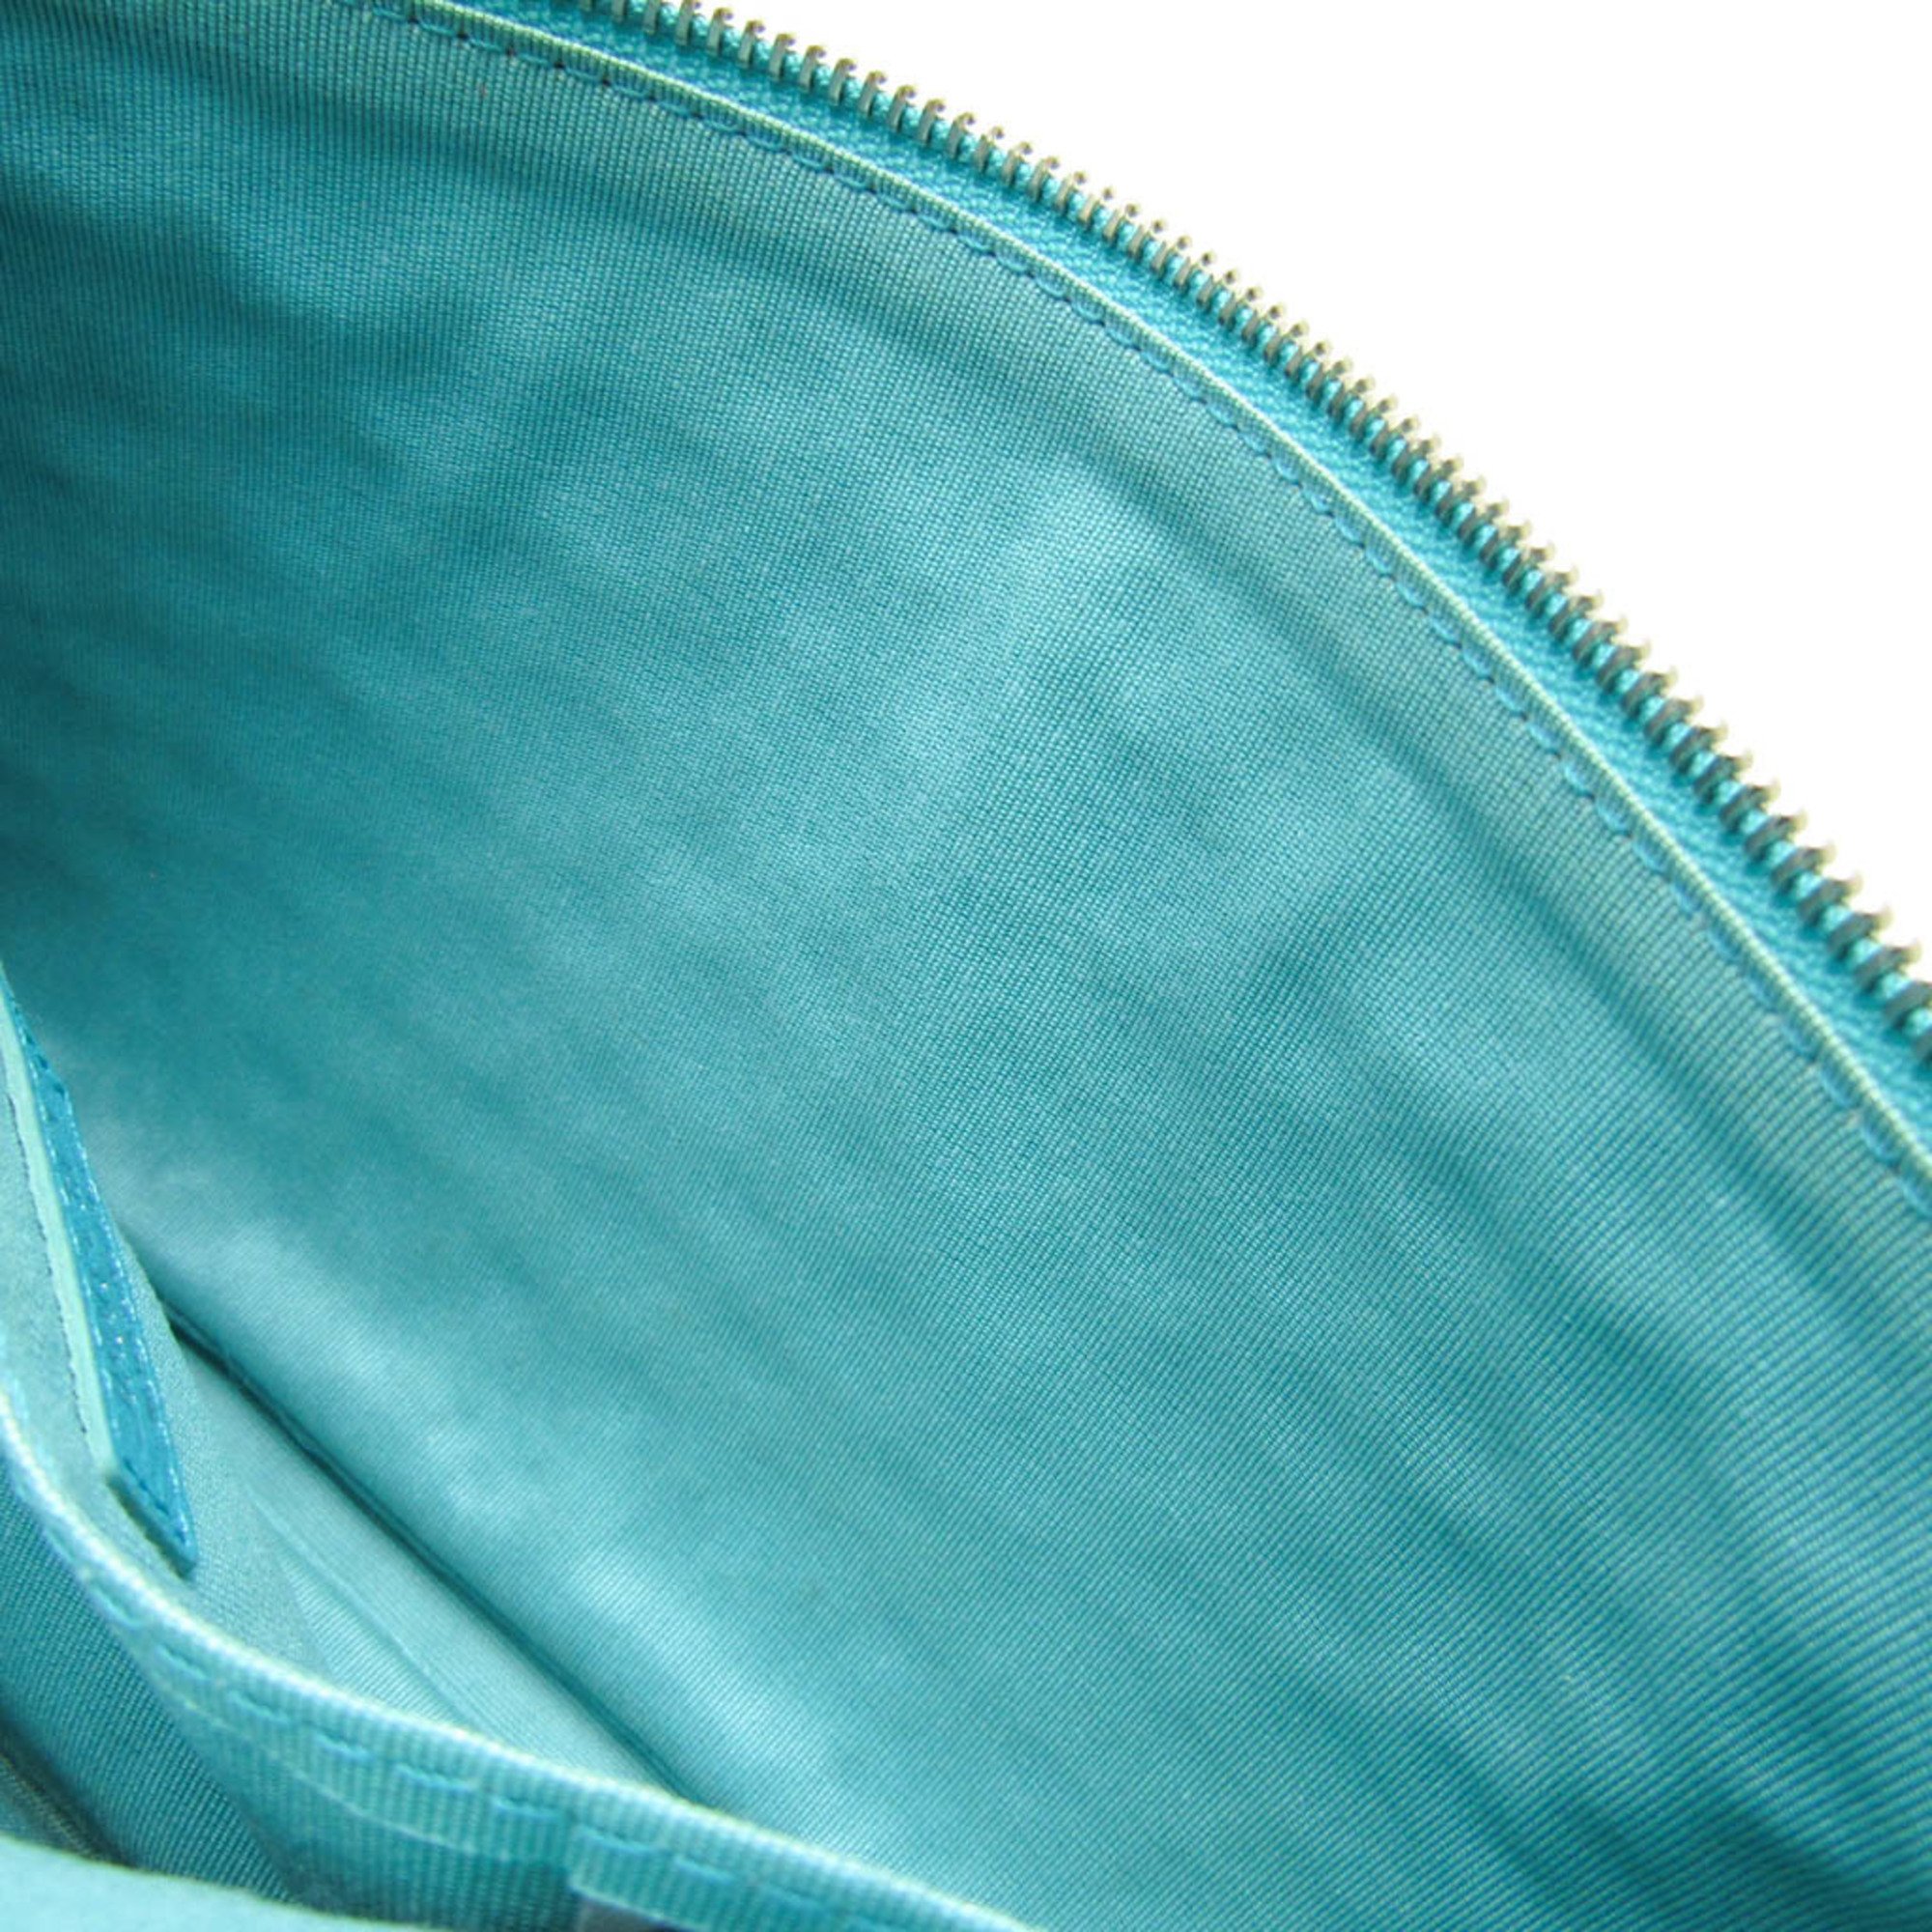 Jimmy Choo ZENA Women's Leather Studded Clutch Bag Green